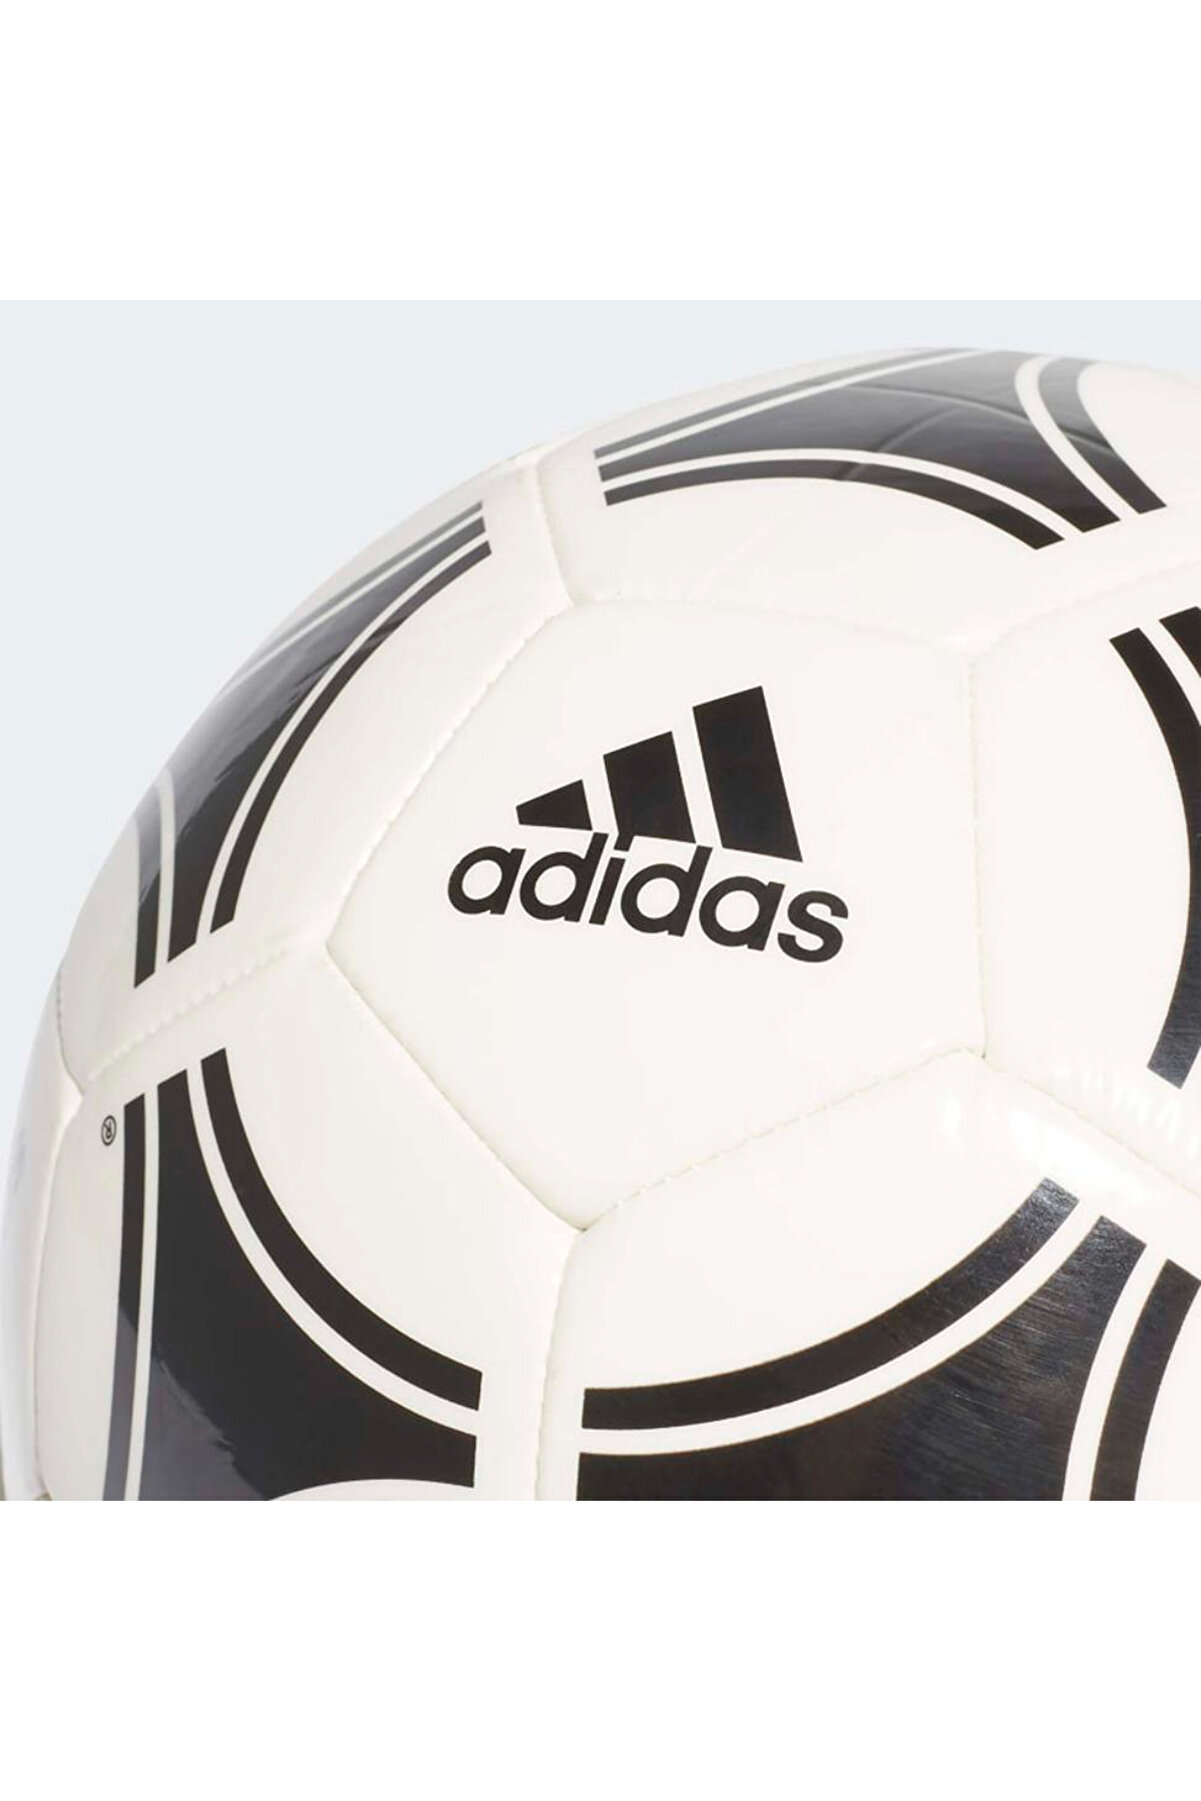 adidas S12241-u Tango Glıder Erkek Futbol Topu Beyaz